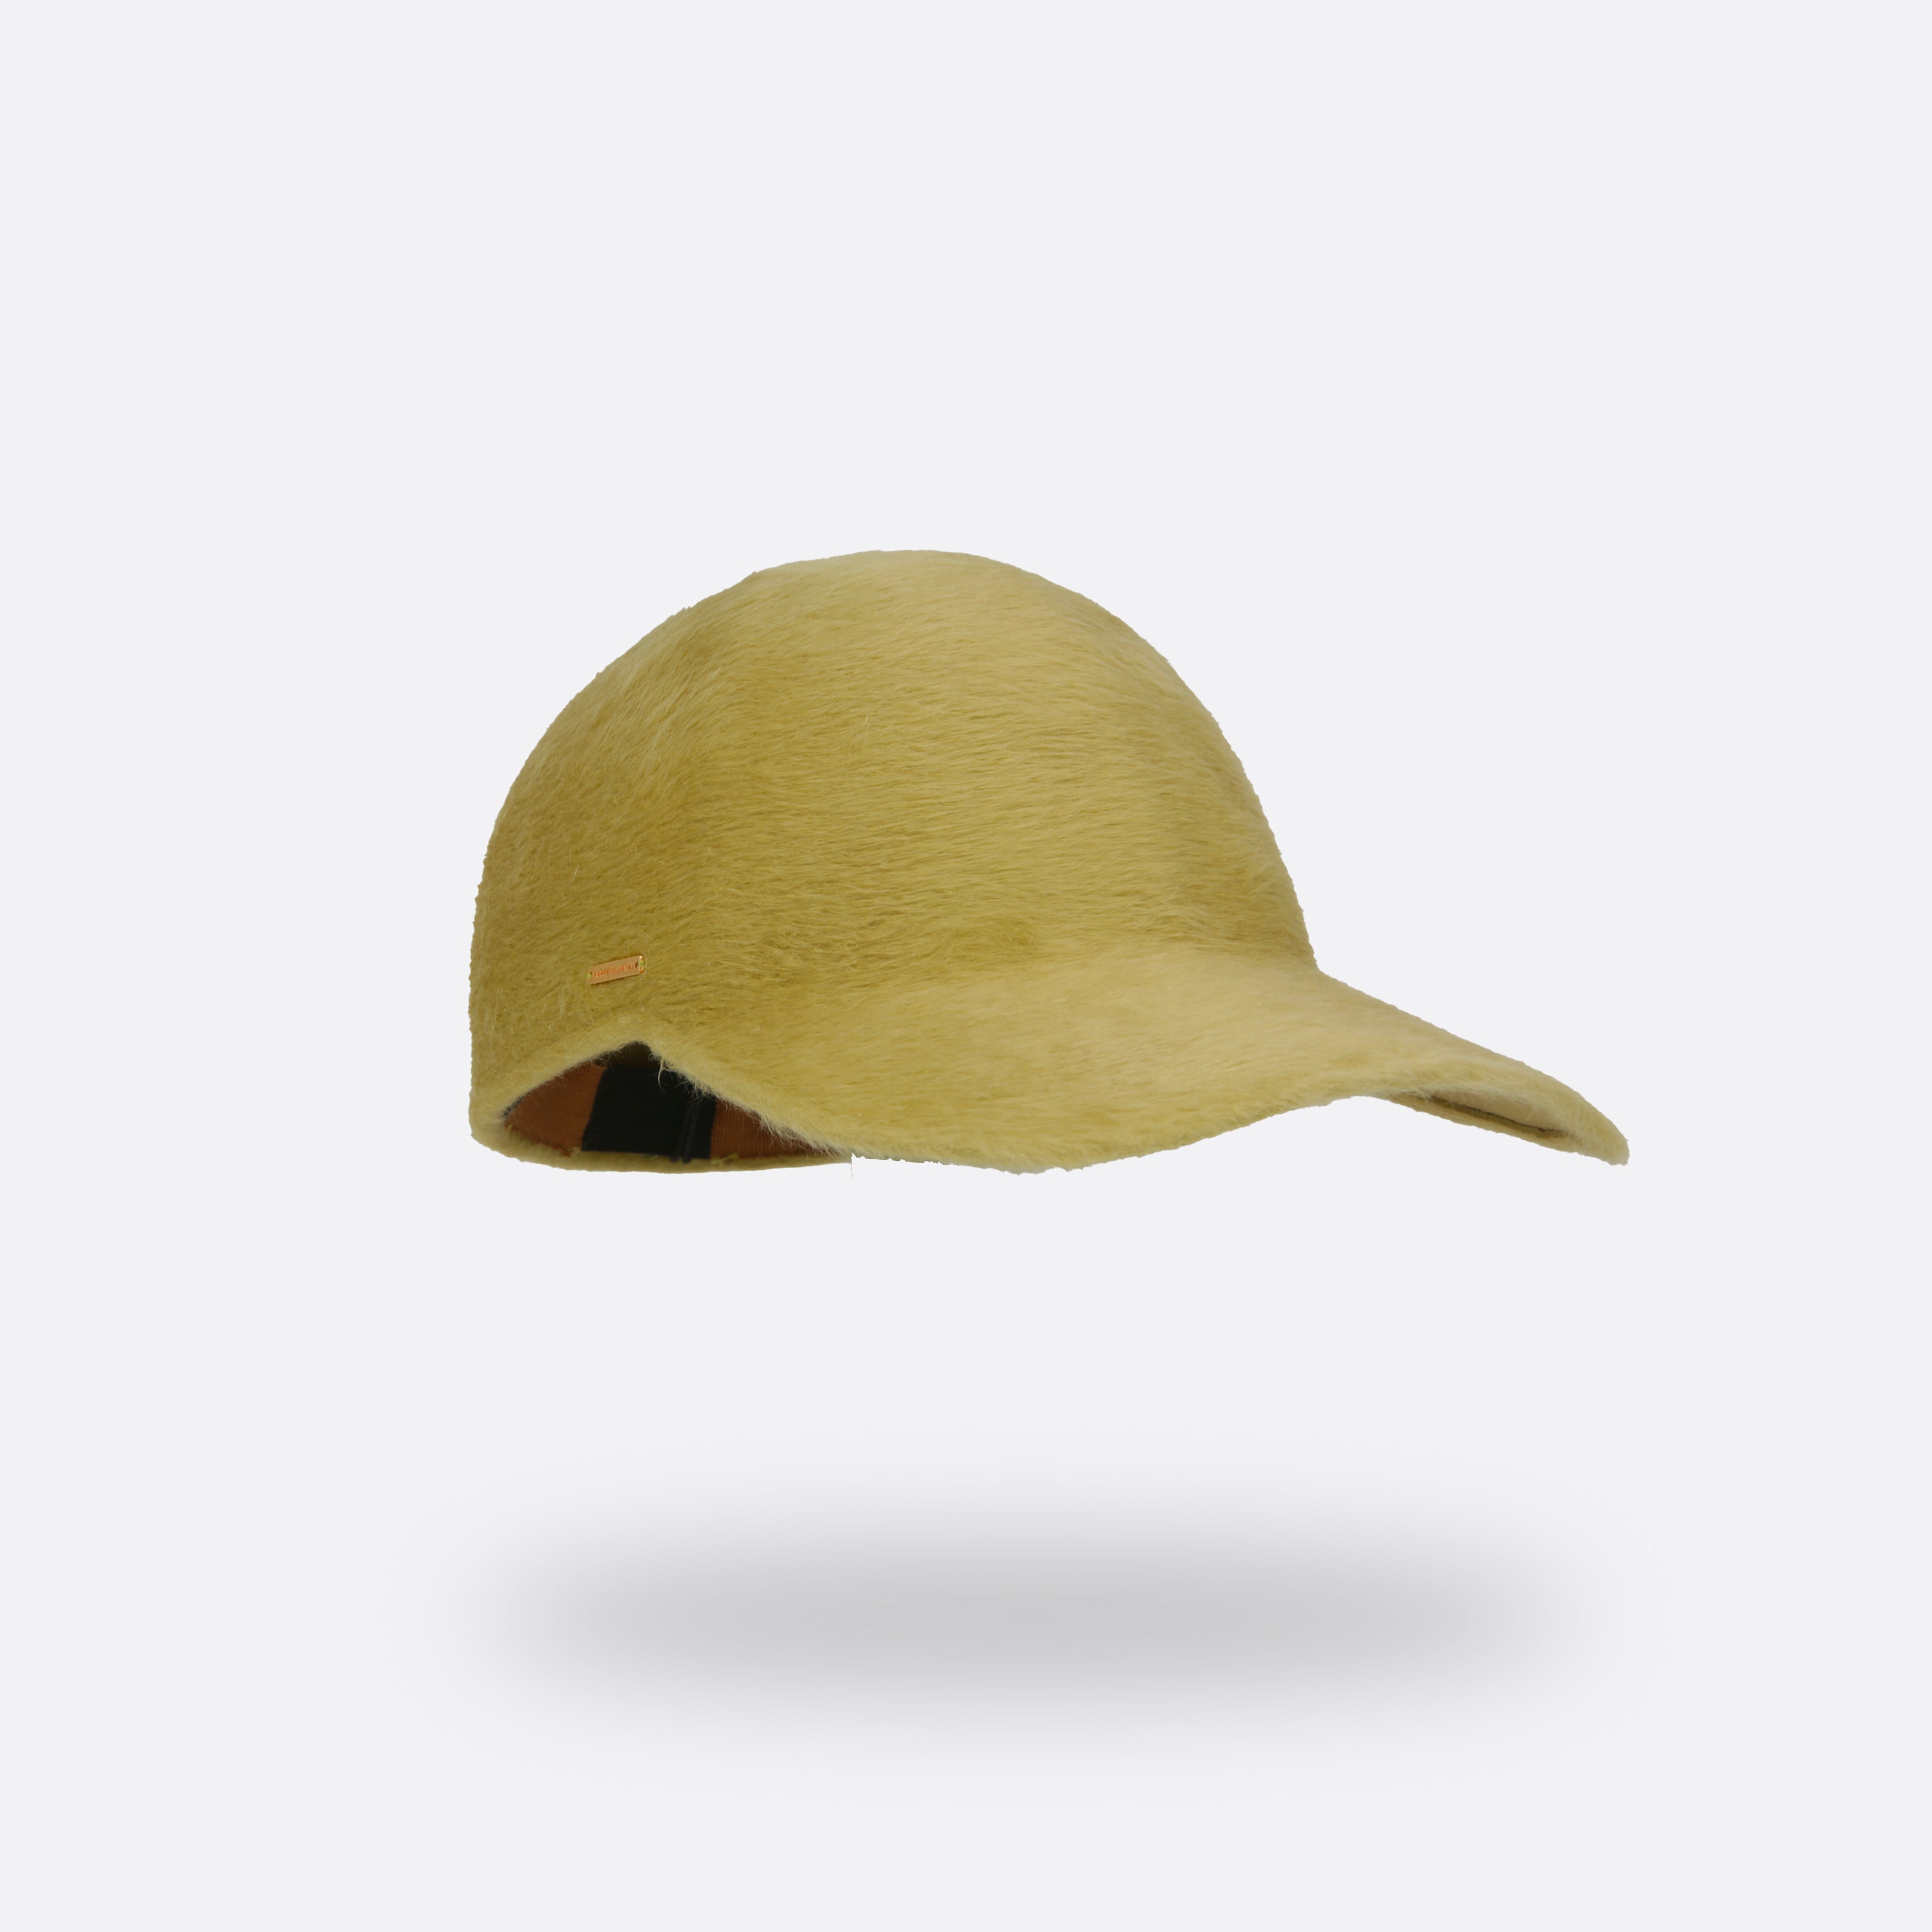 pierre courtial handcrafted designer cap